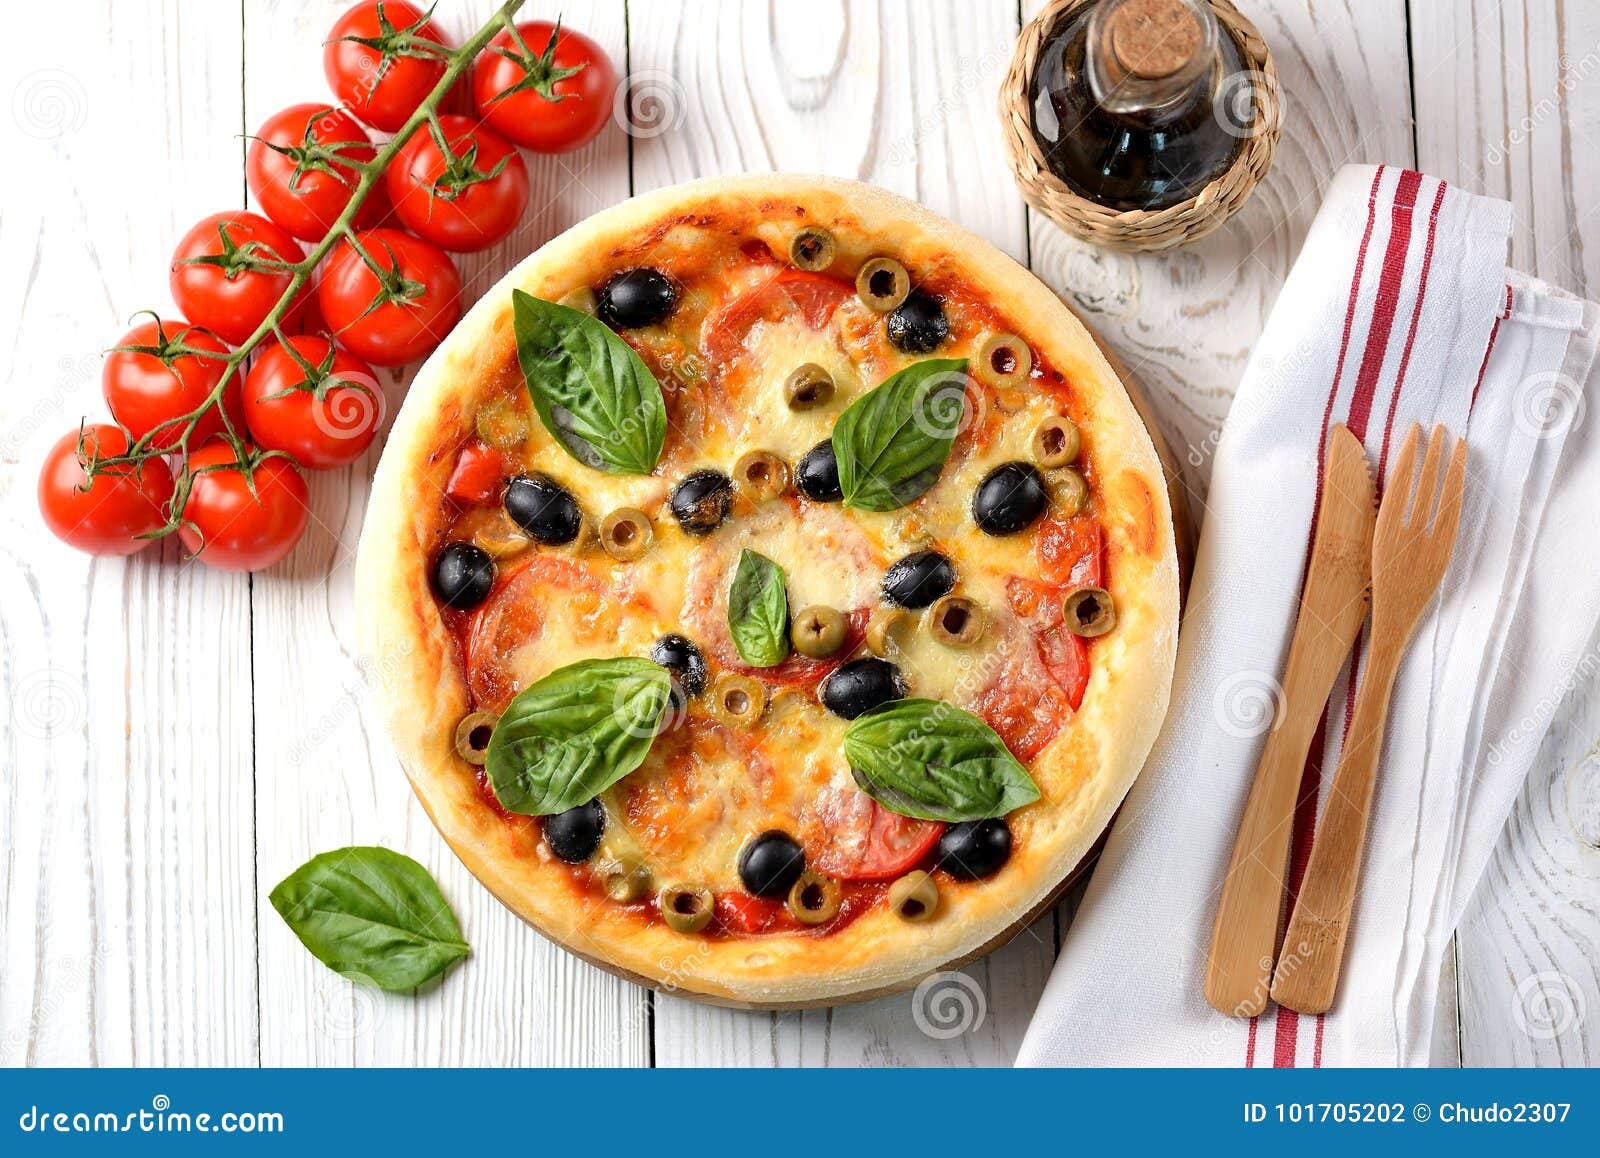 PHOTO FOOD PIZZA CHEESE TOMATO MUSHROOM OLIVE POSTER ART PRINT BB264B